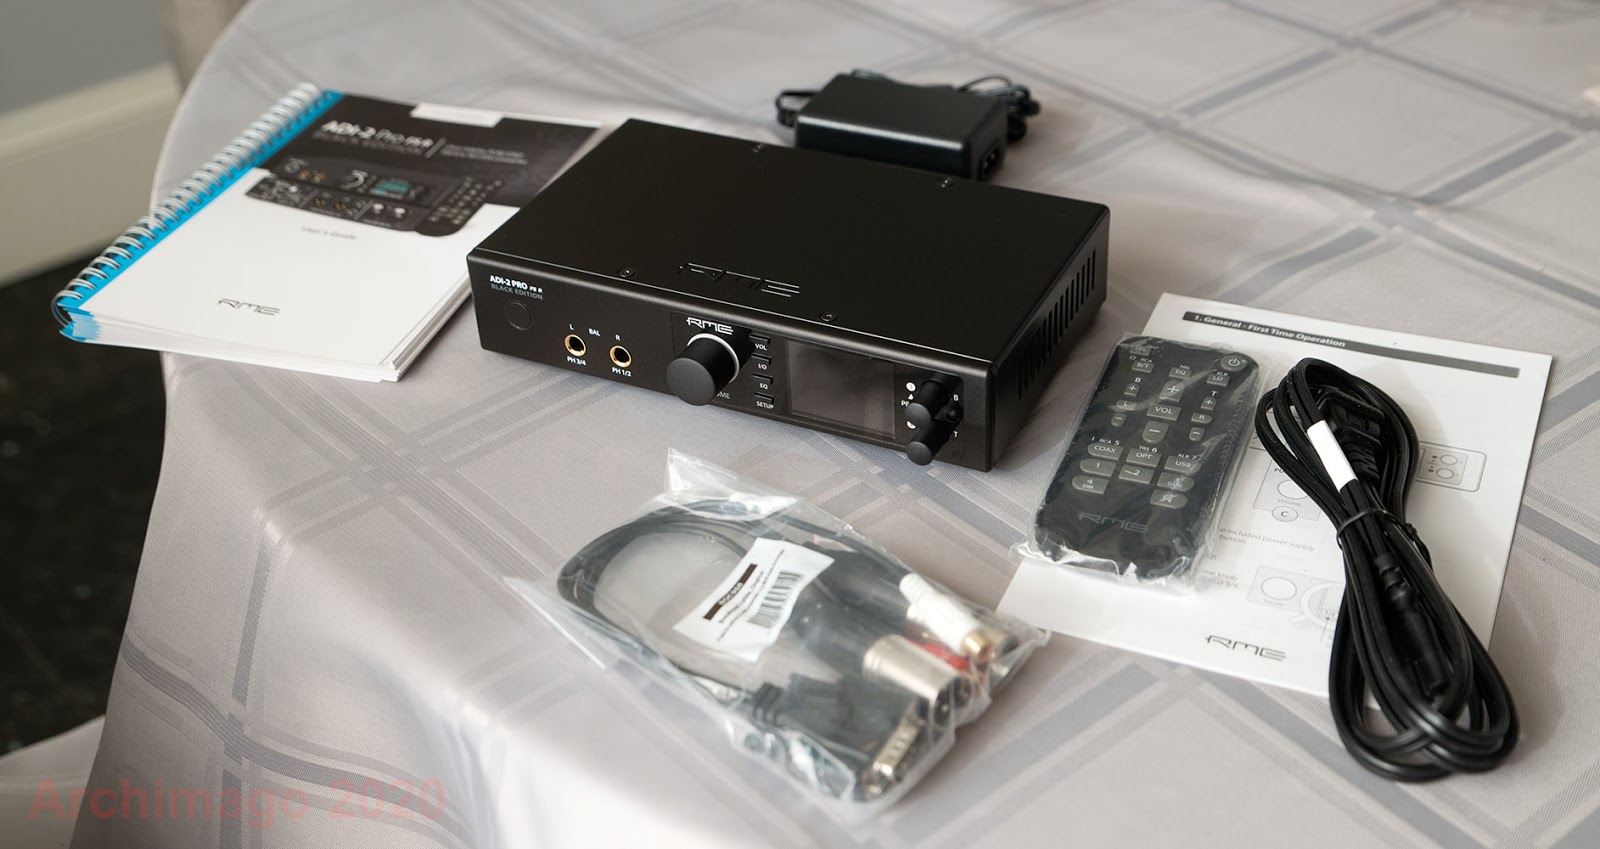 ADI-2-DAC FS - RME Audio, Interfaz de audio